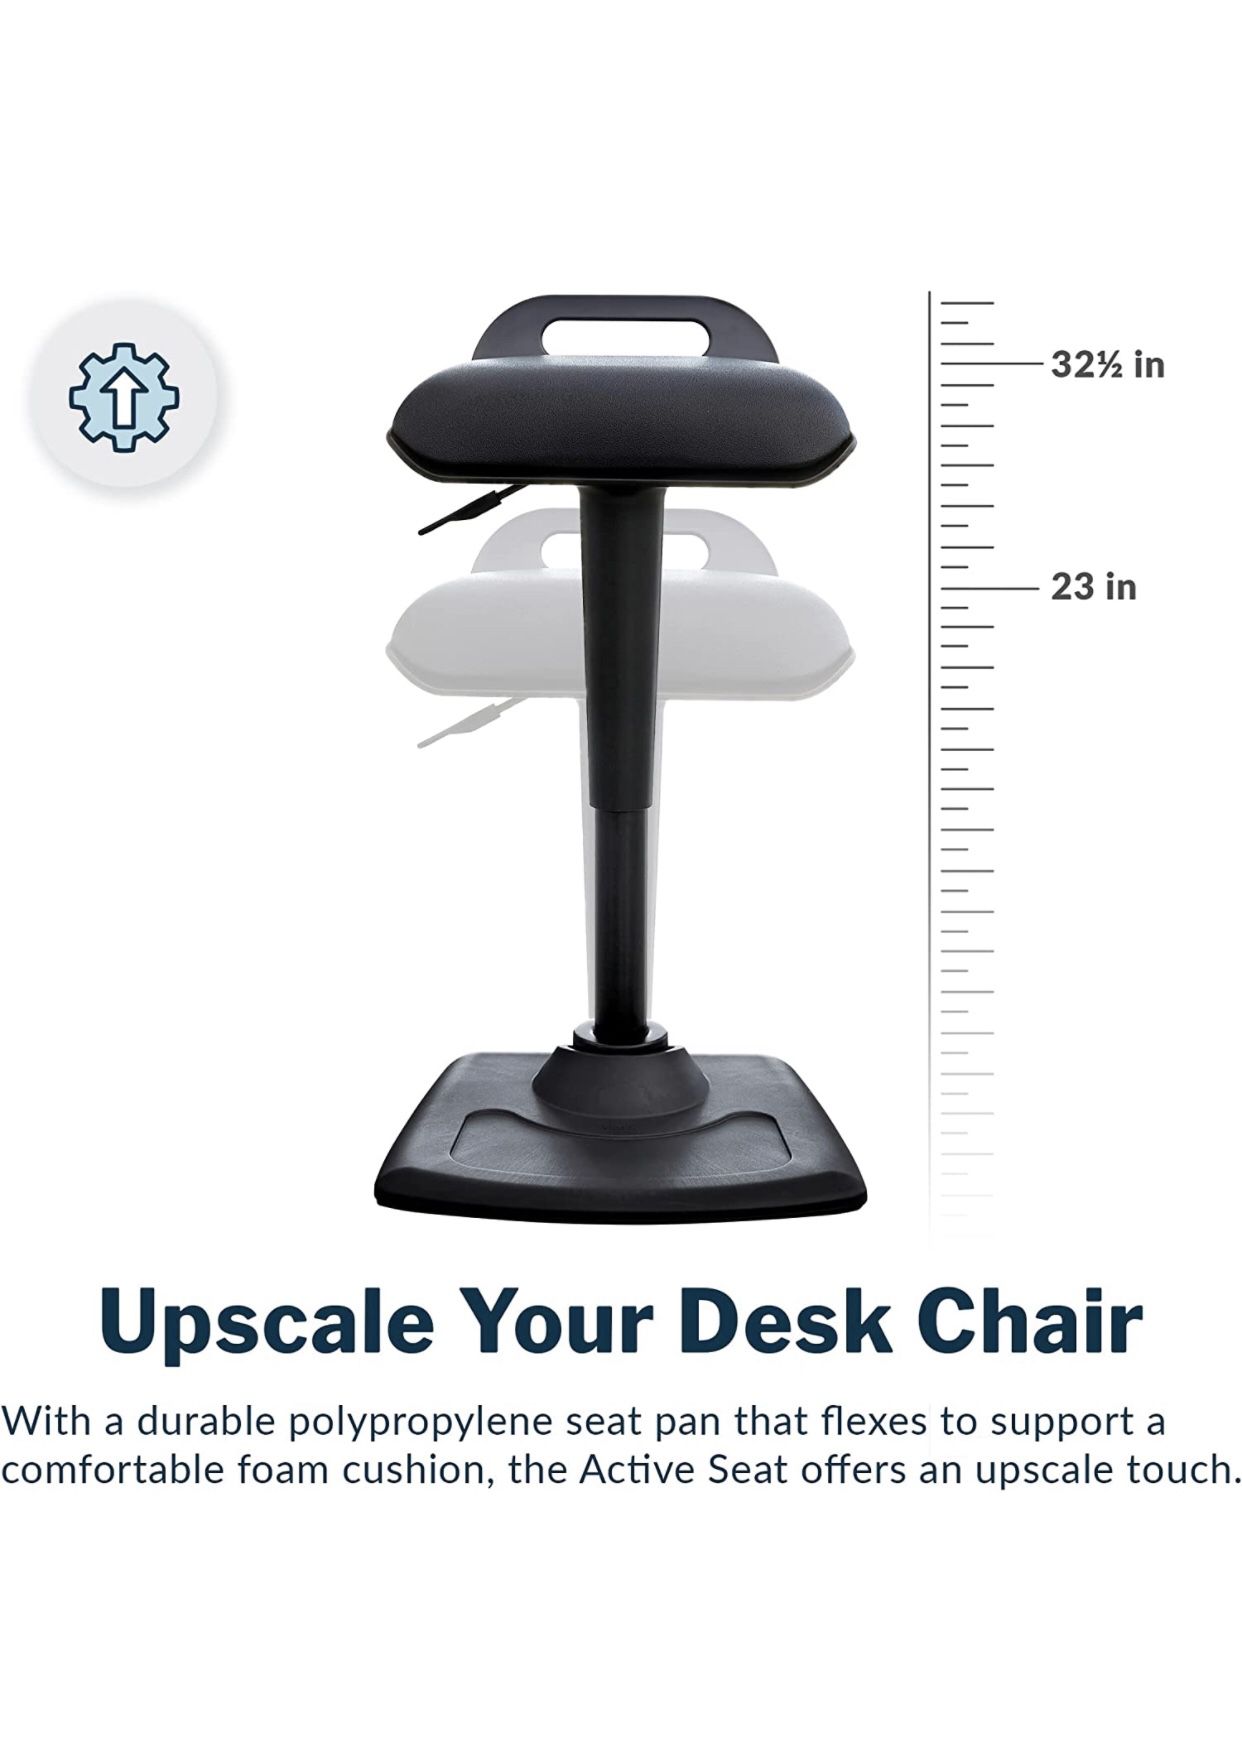 Active Seat - Adjustable Standing Desk Chair - Ergonomic Wobble Office Desk Stool w/Dynamic Range of Motion - Encourage Good Posture - Portable Stools